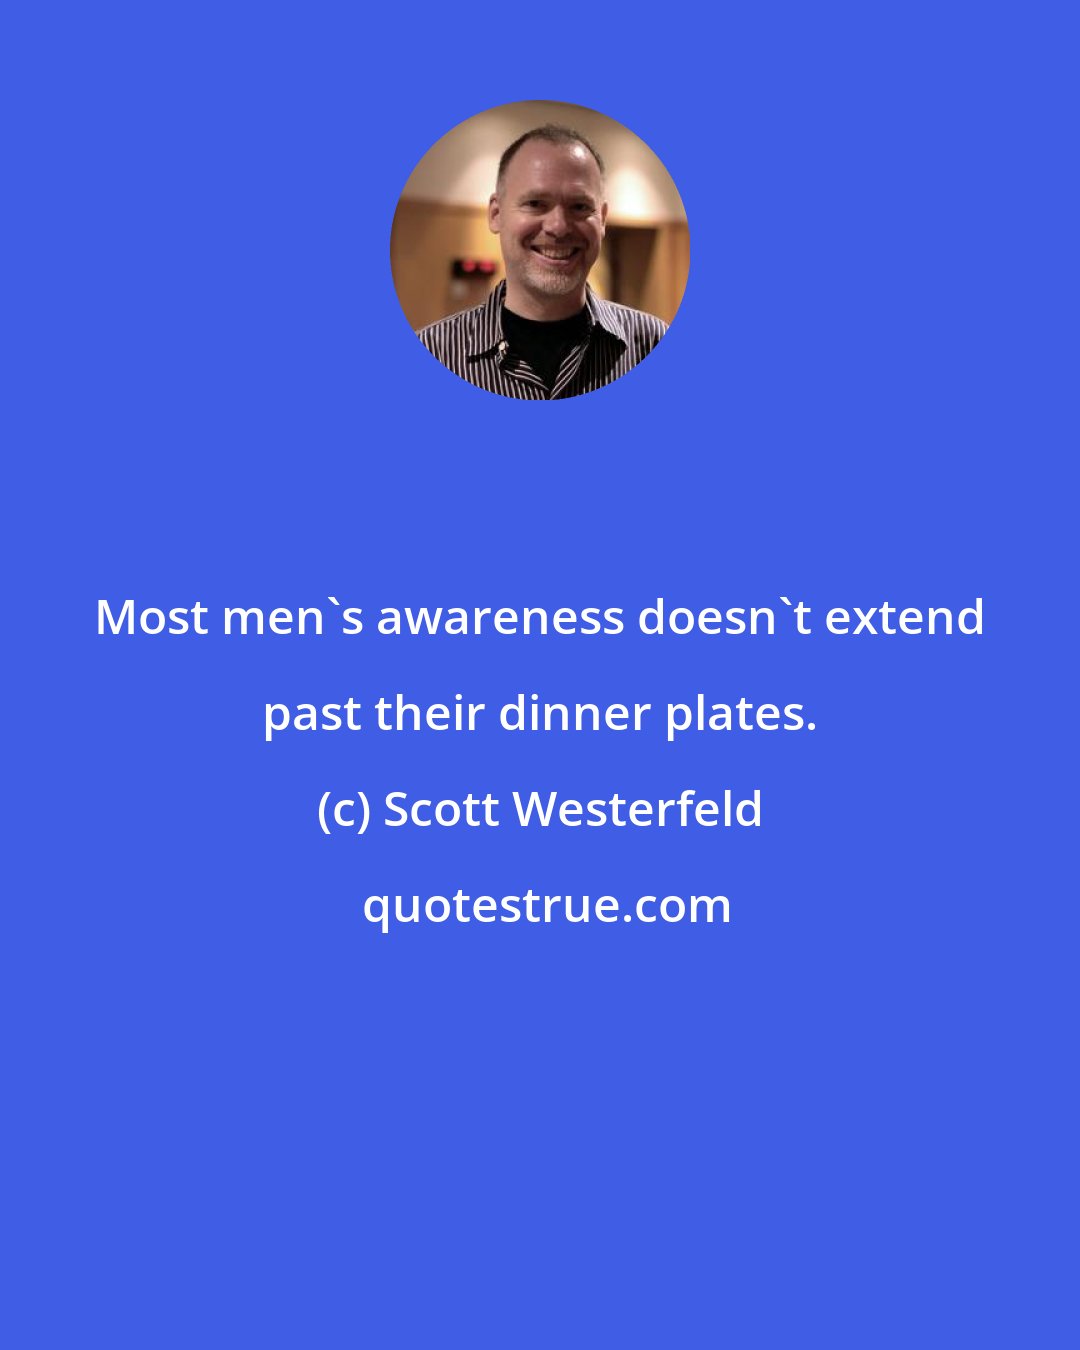 Scott Westerfeld: Most men's awareness doesn't extend past their dinner plates.